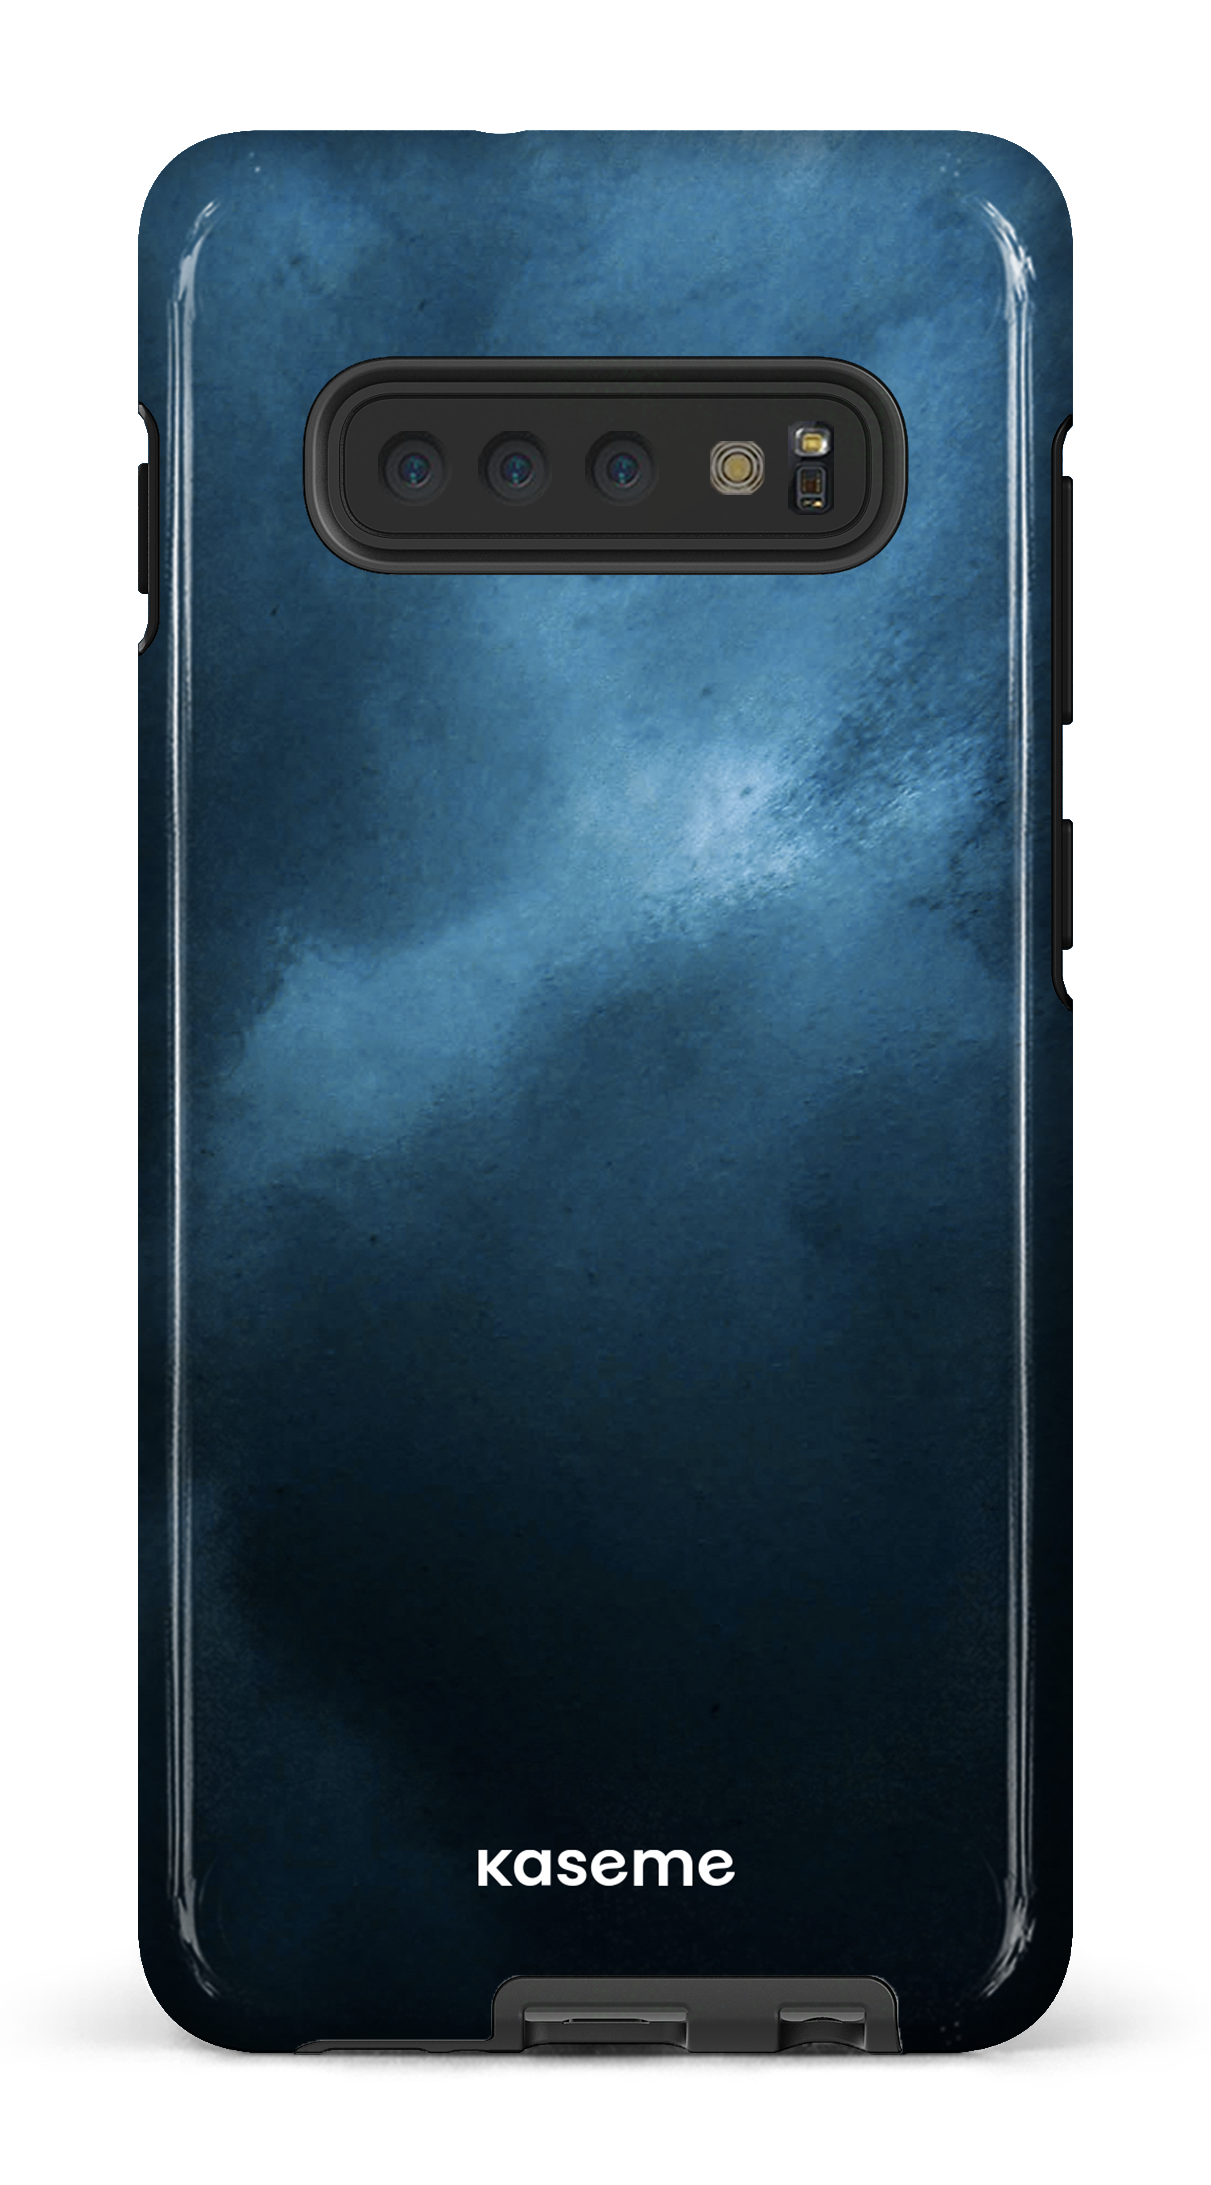 Upside Down - Galaxy S10 Plus